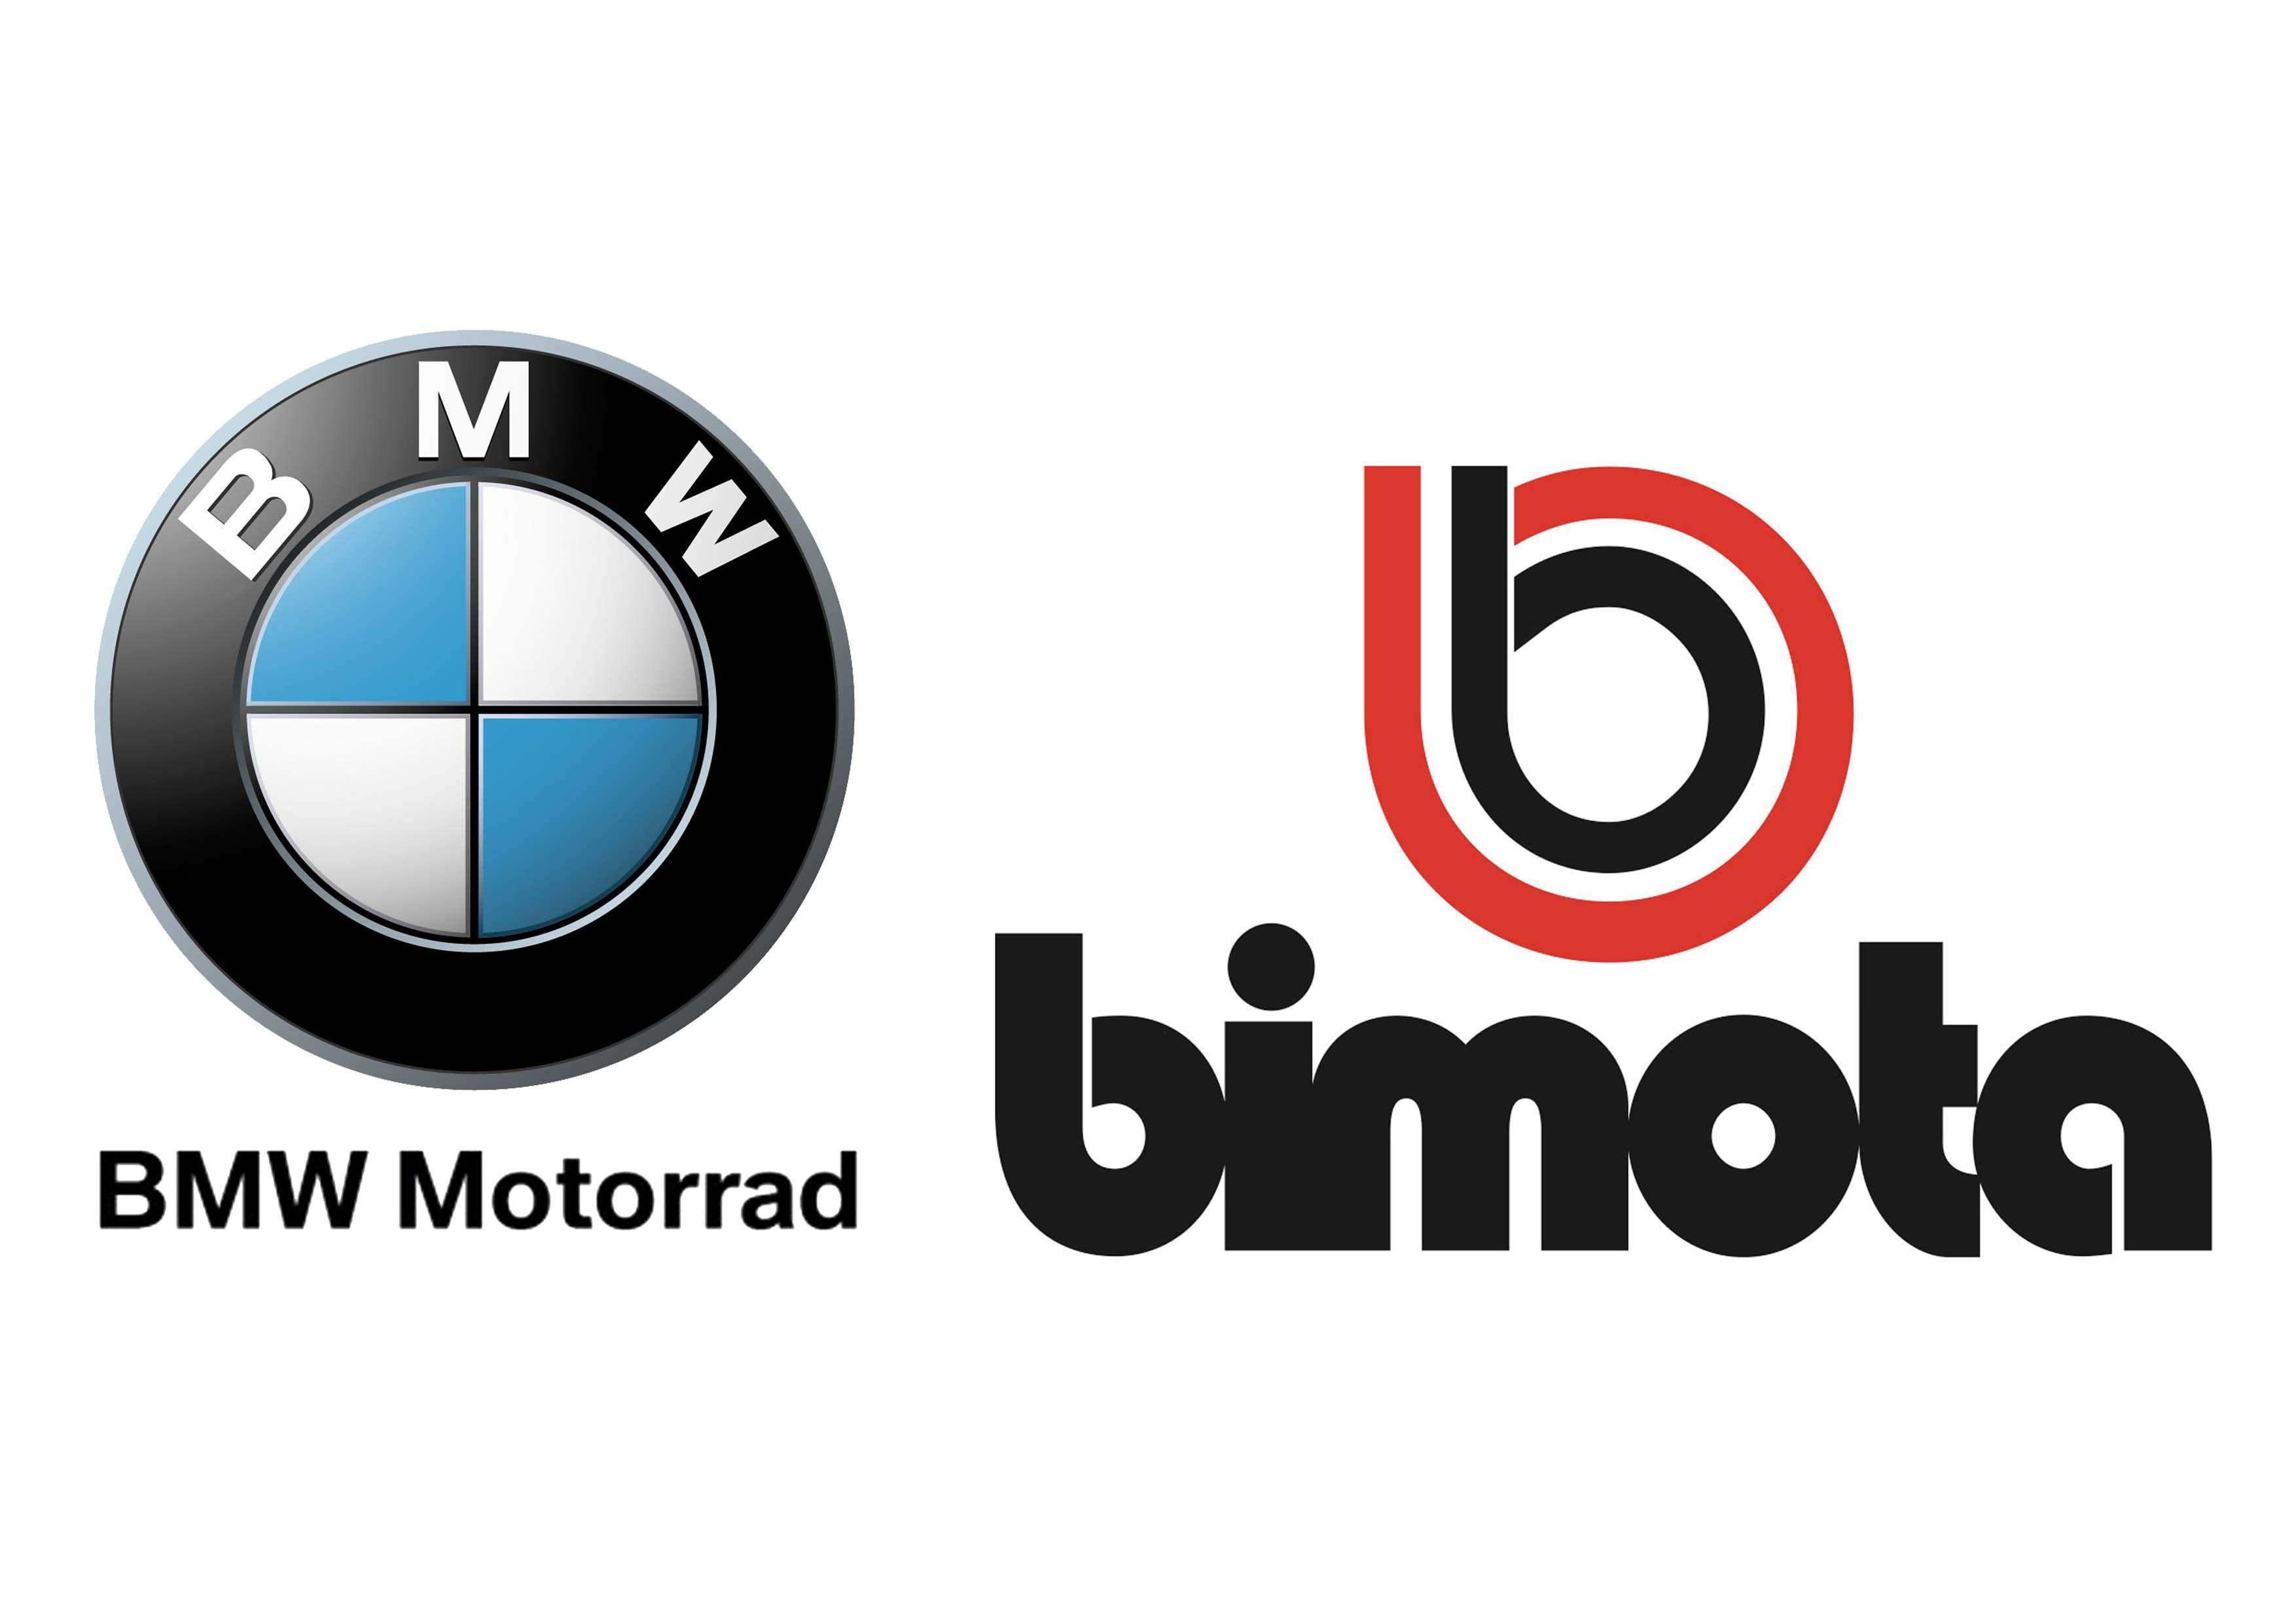 BMW Motorcycle Logo - BMW Motorrad takes up cooperation partnership with Bimota